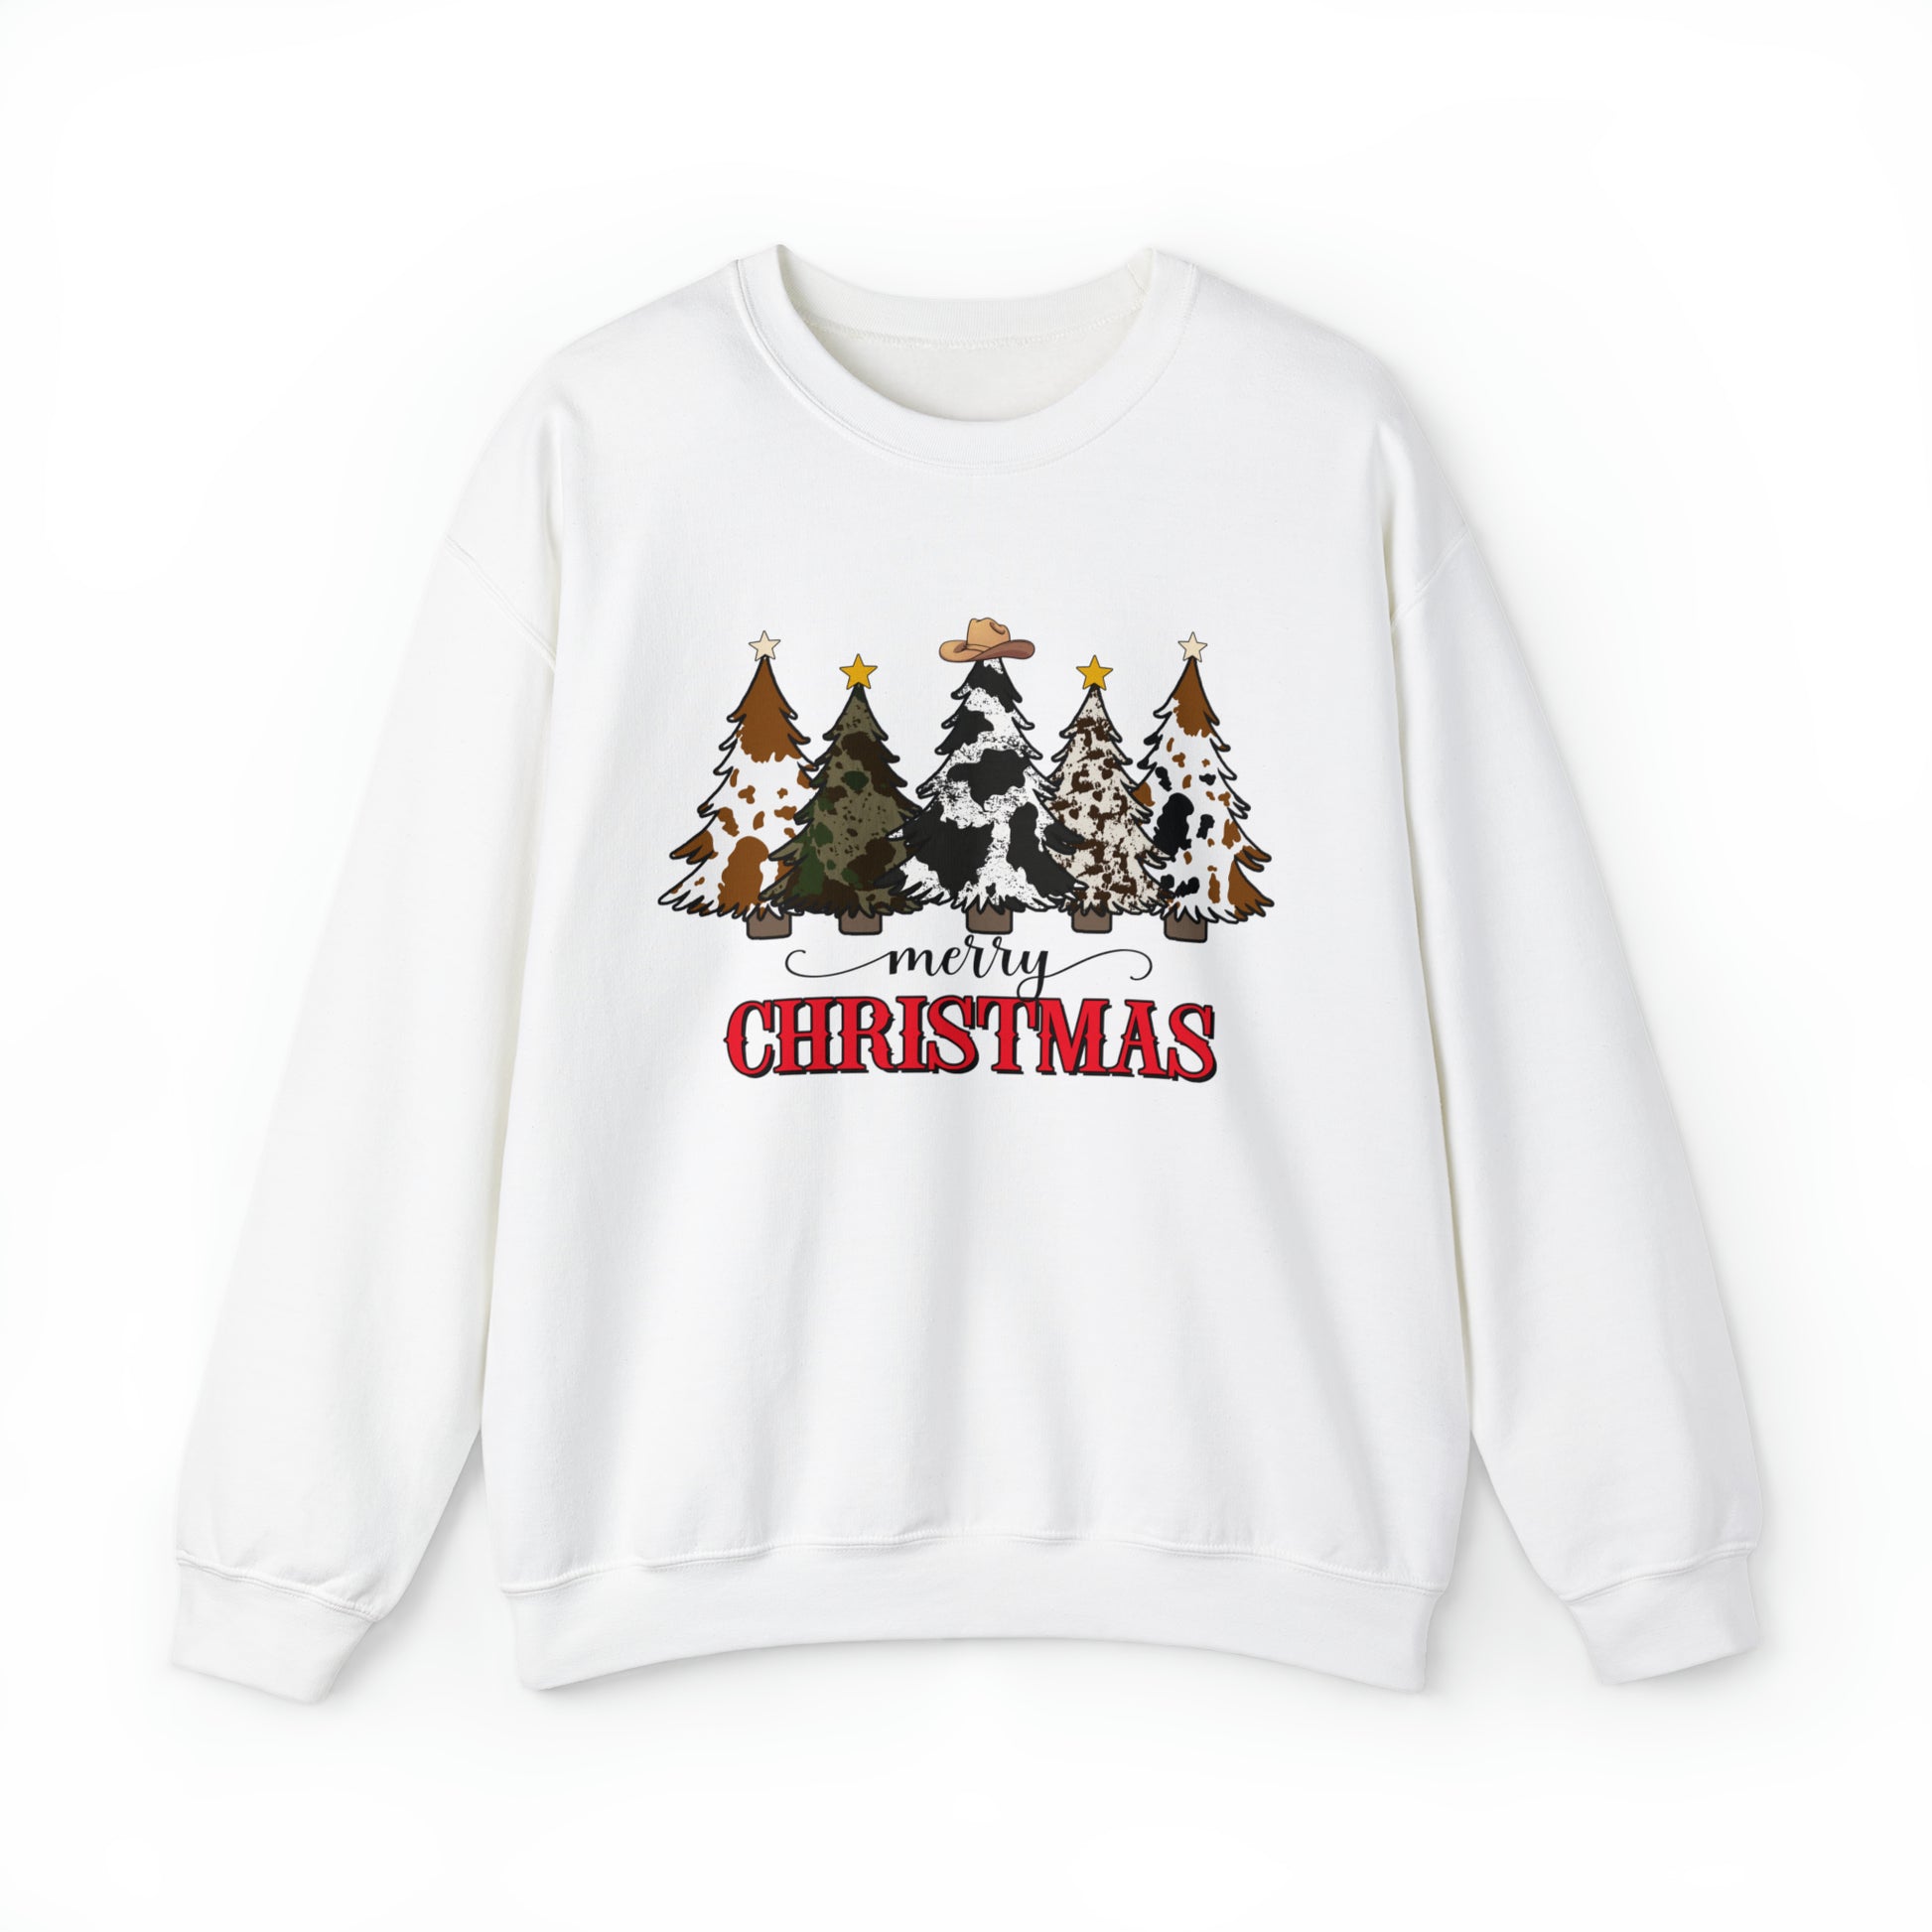 Cowboy and Cowgirl Christmas Sweatshirt, Cute Cowhide Christmas Tree Sweatshirt, Western Holiday Cozy Sweater, Christmas Shirt Gift Idea - Teez Closet